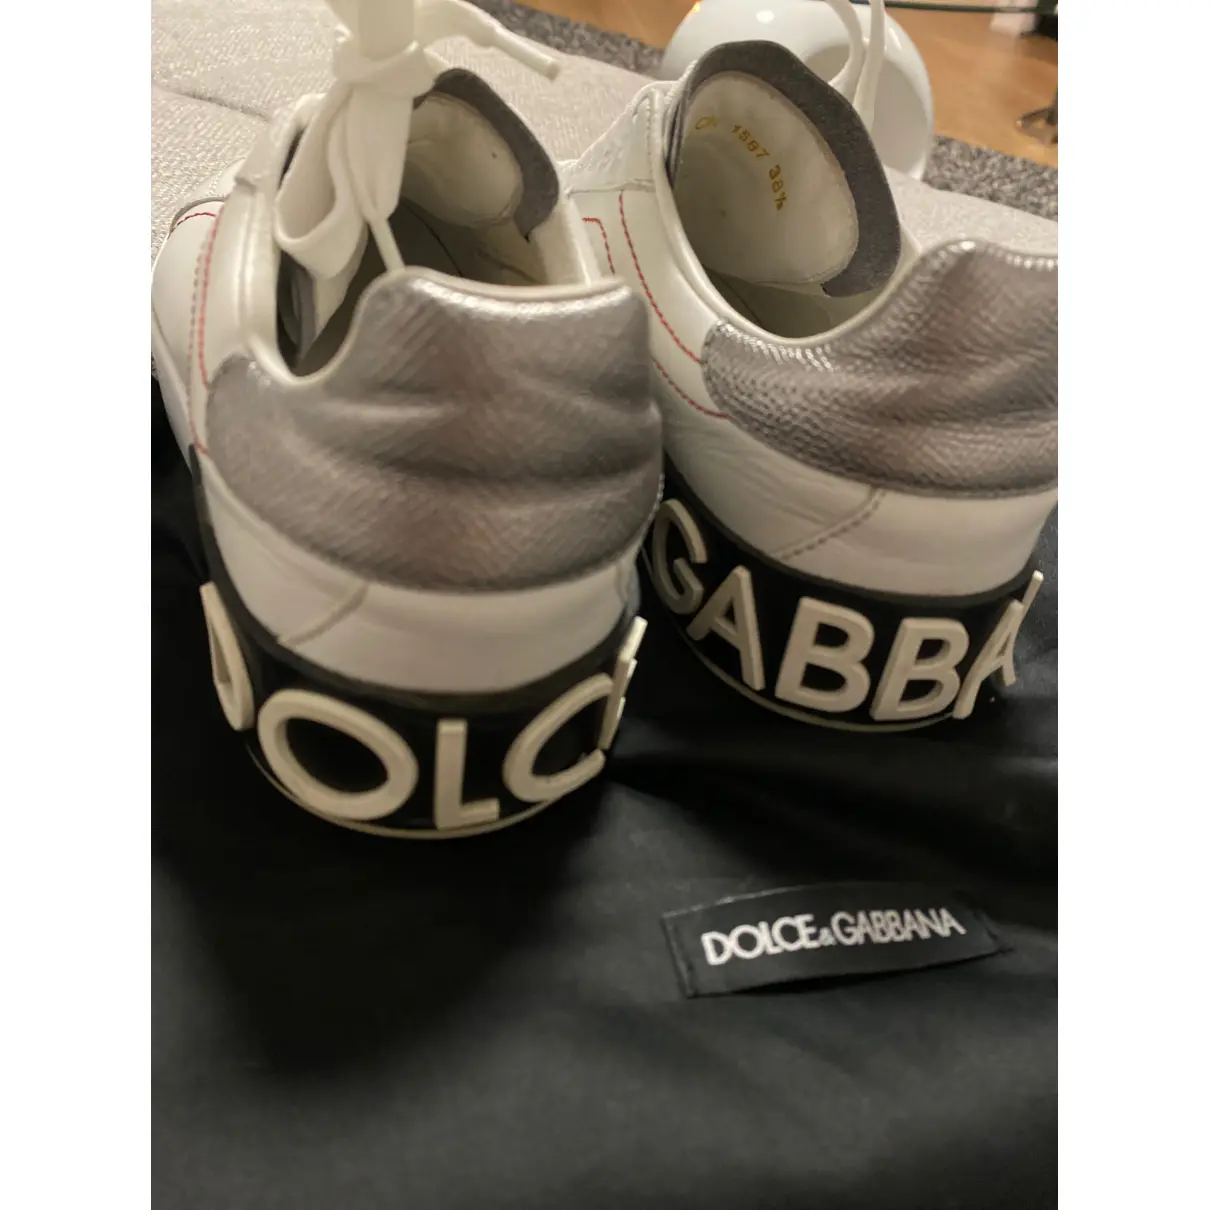 Buy Dolce & Gabbana Portofino leather trainers online